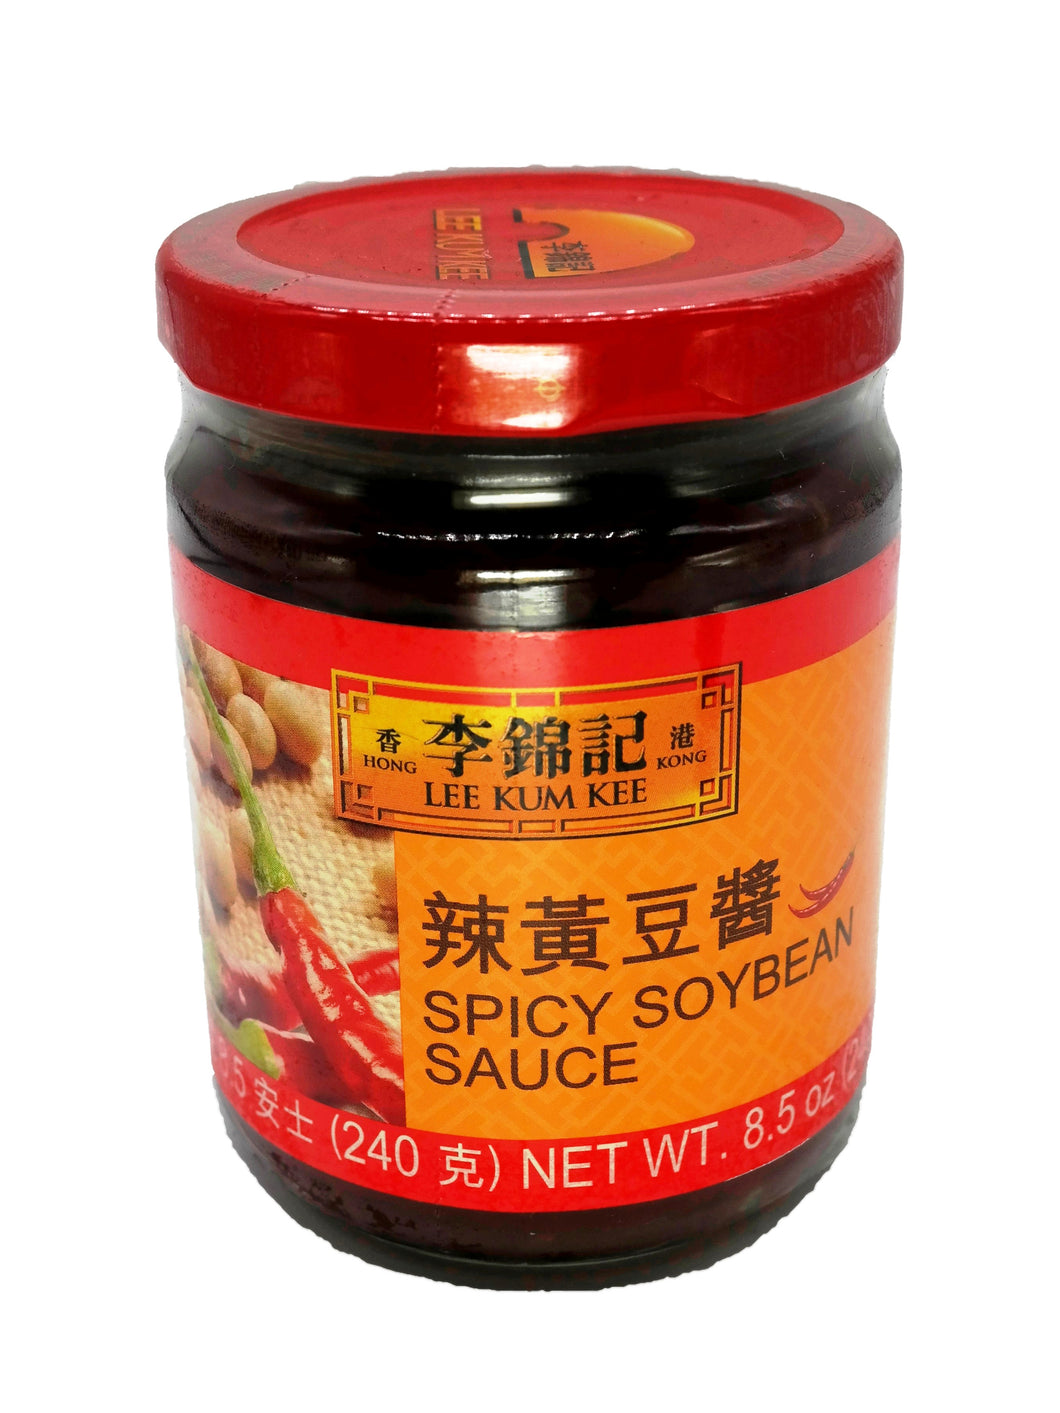 Lee Kum Kee Spicy Soybean Sauce